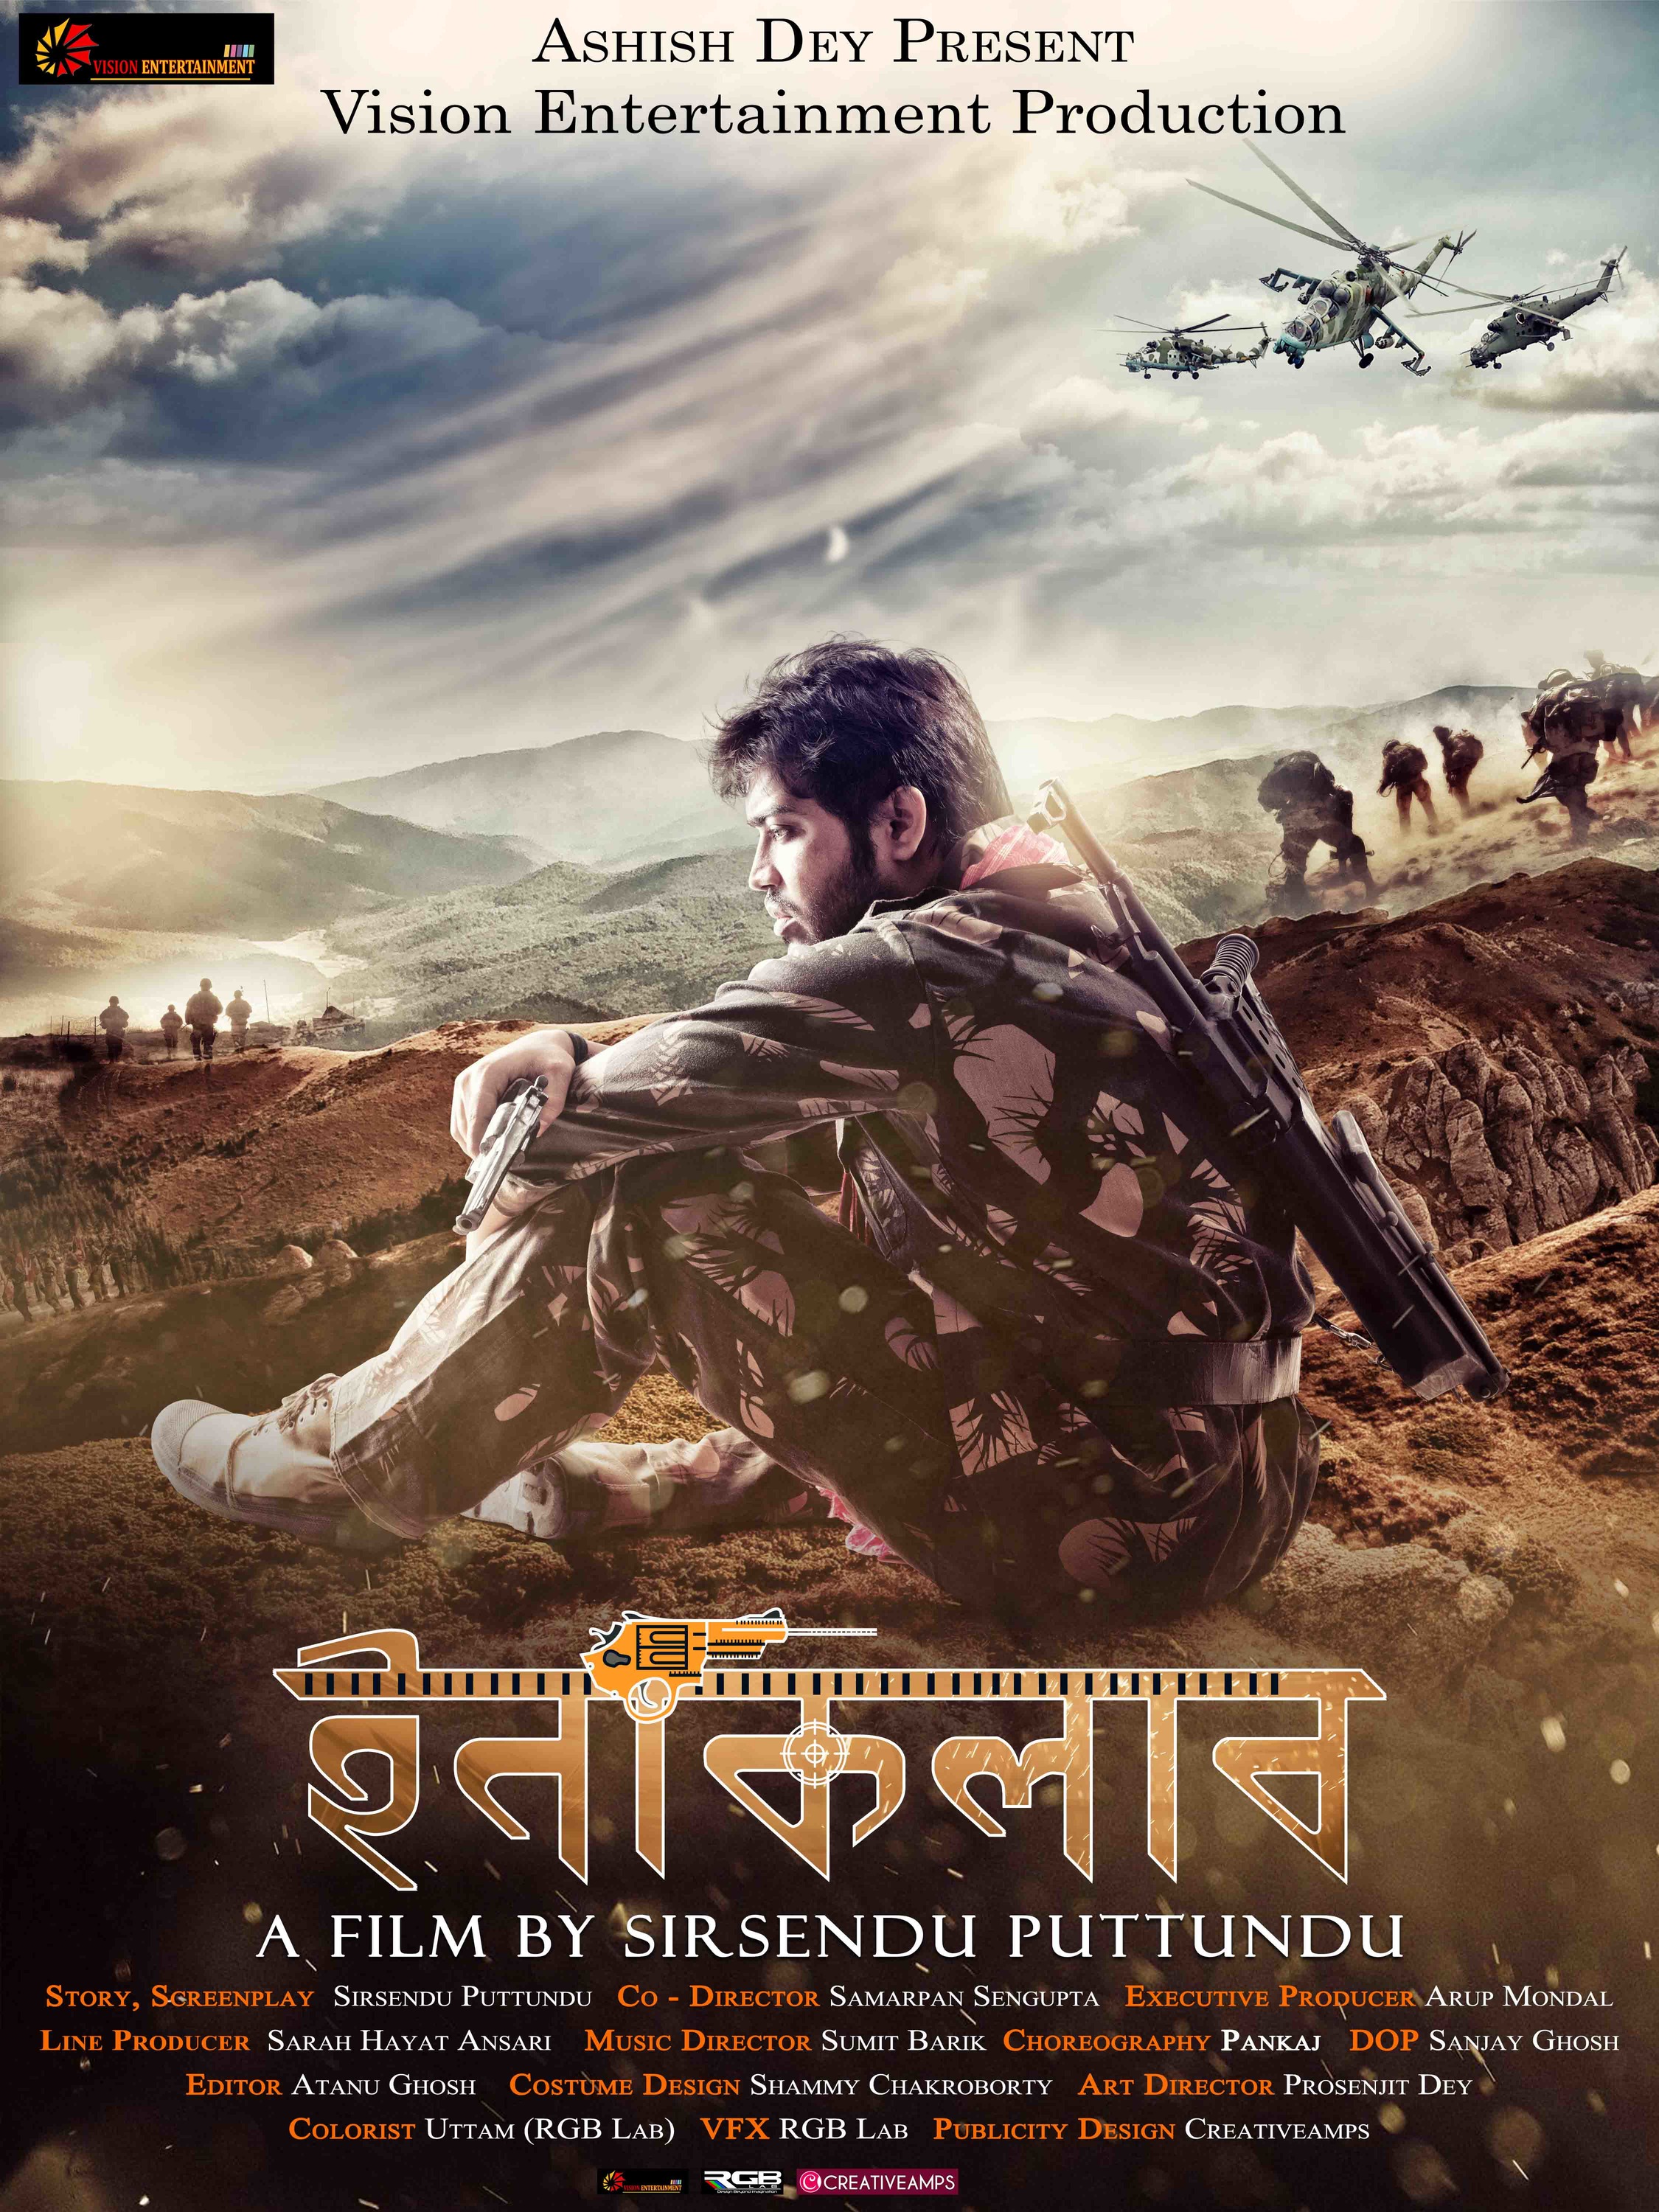 Mega Sized Movie Poster Image for Inkilab (#2 of 2)